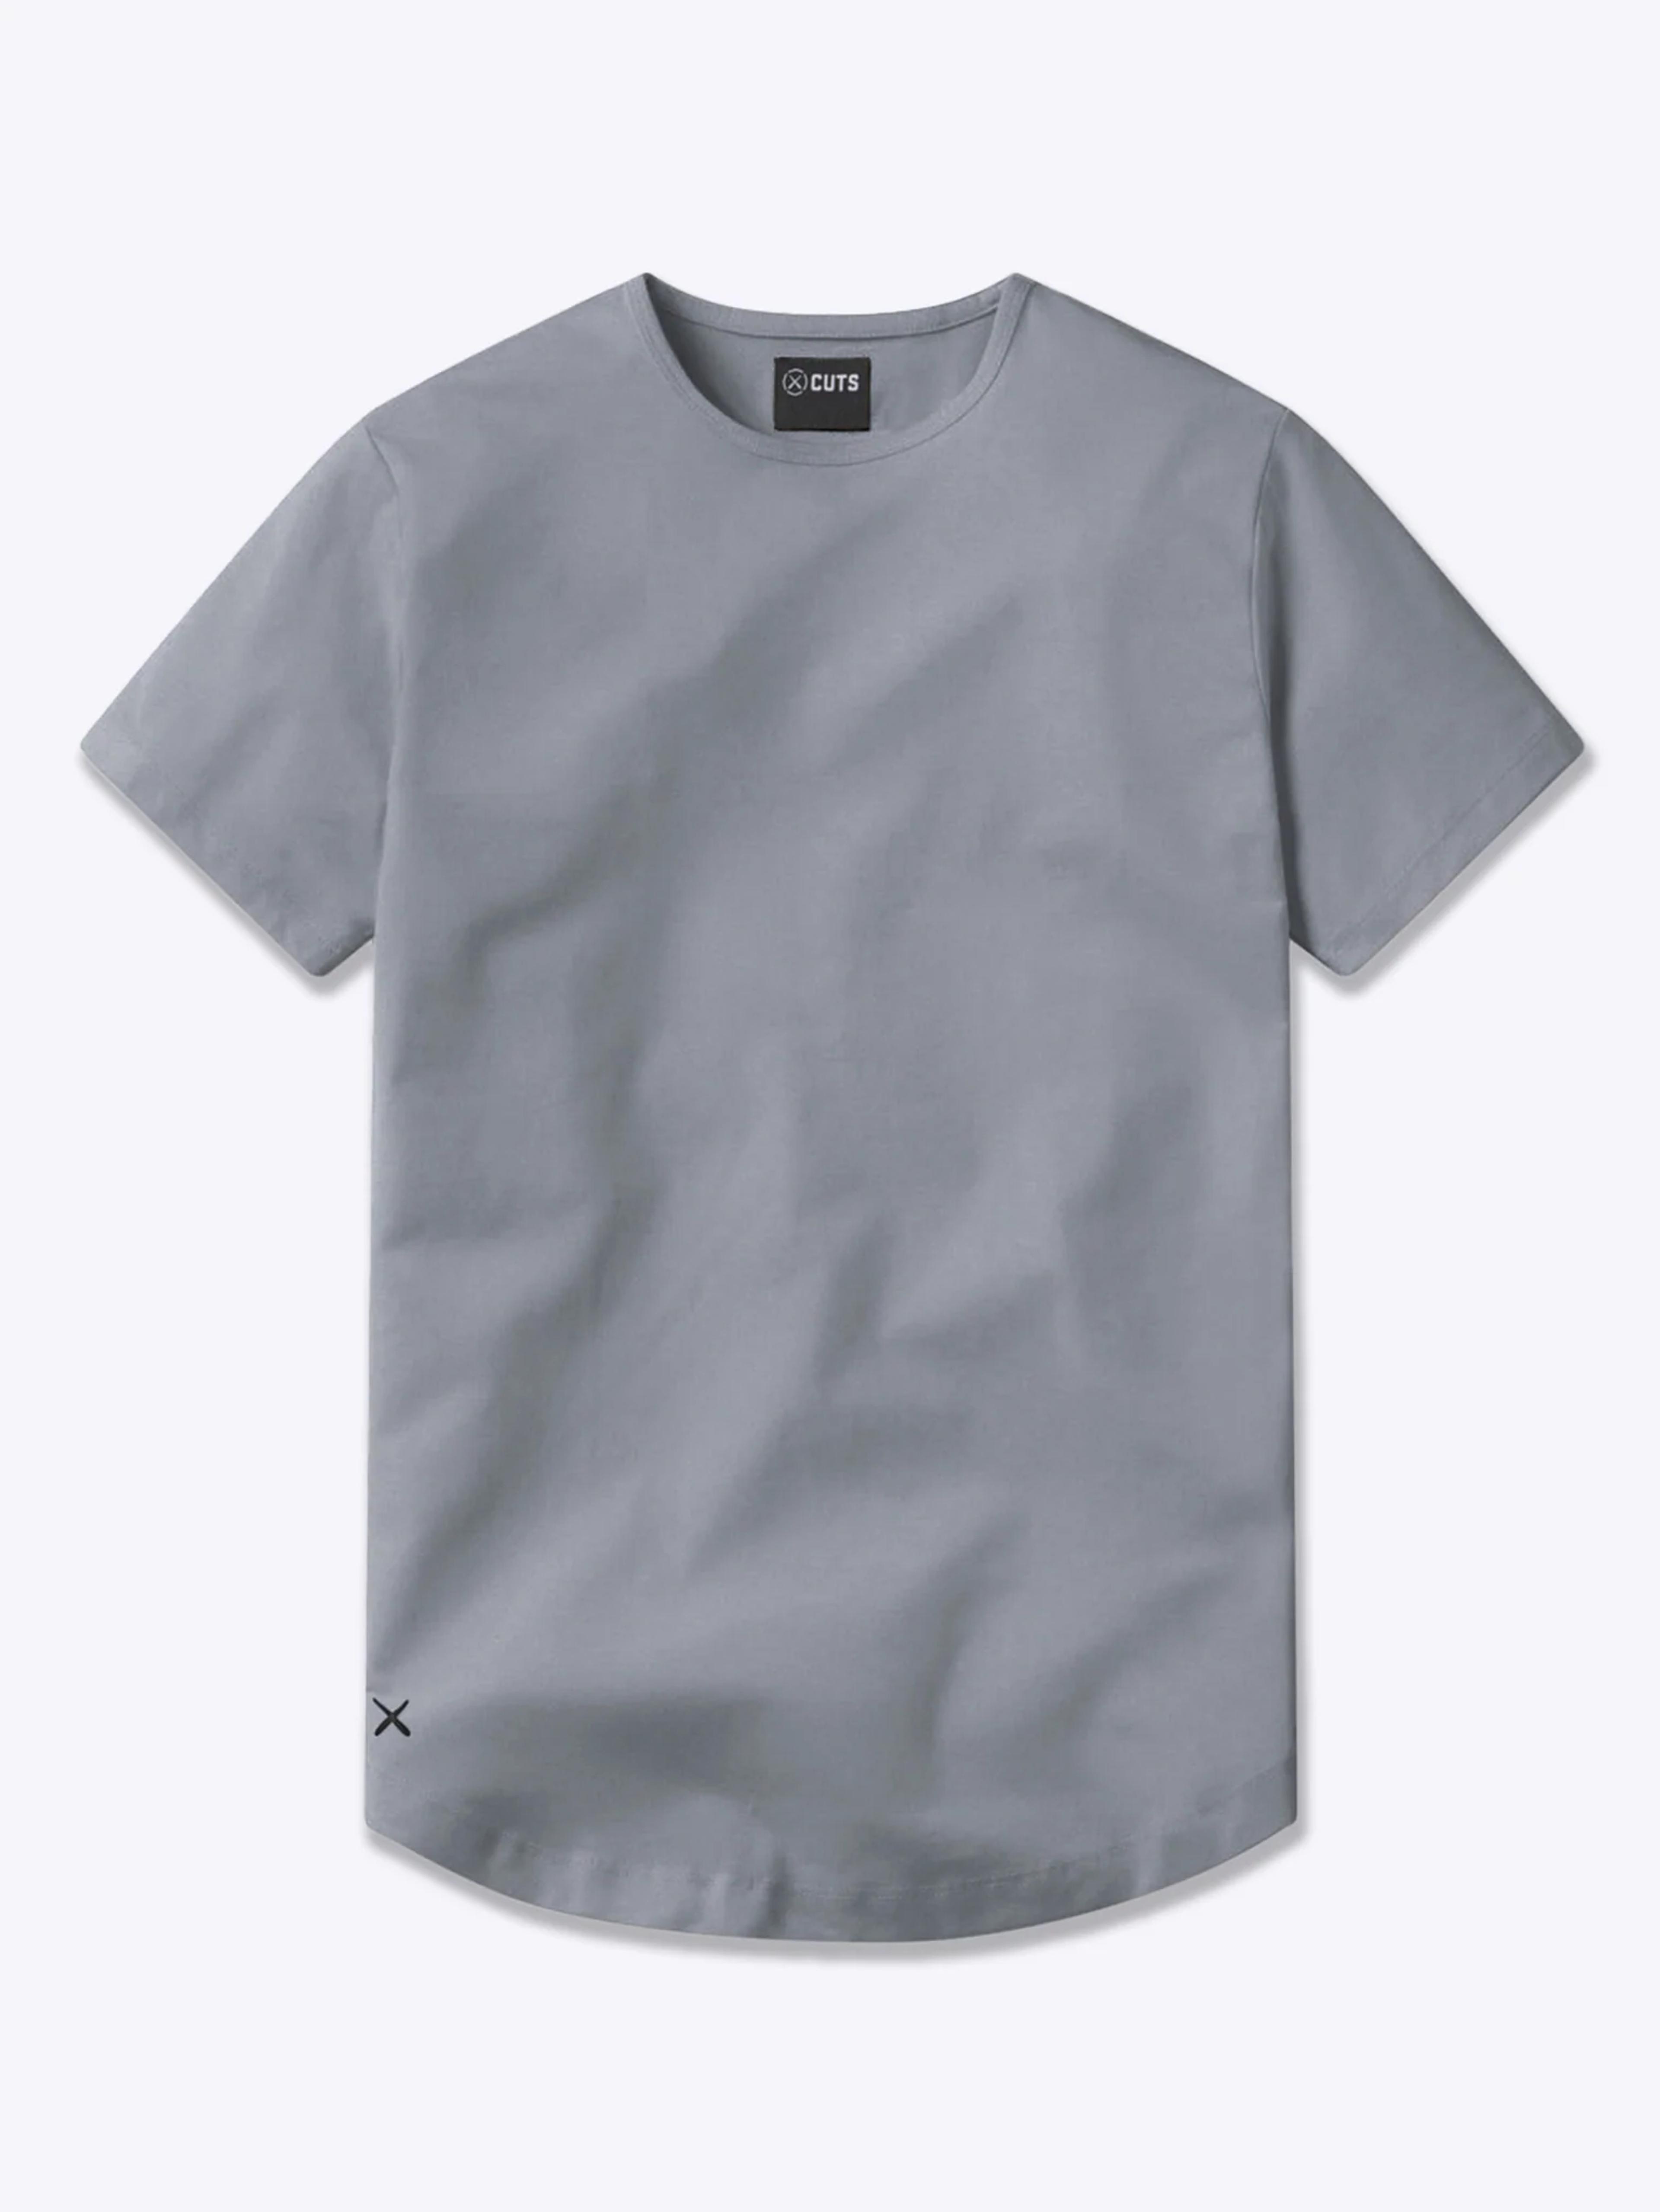 Space Grey Cuts Brand T-Shirt